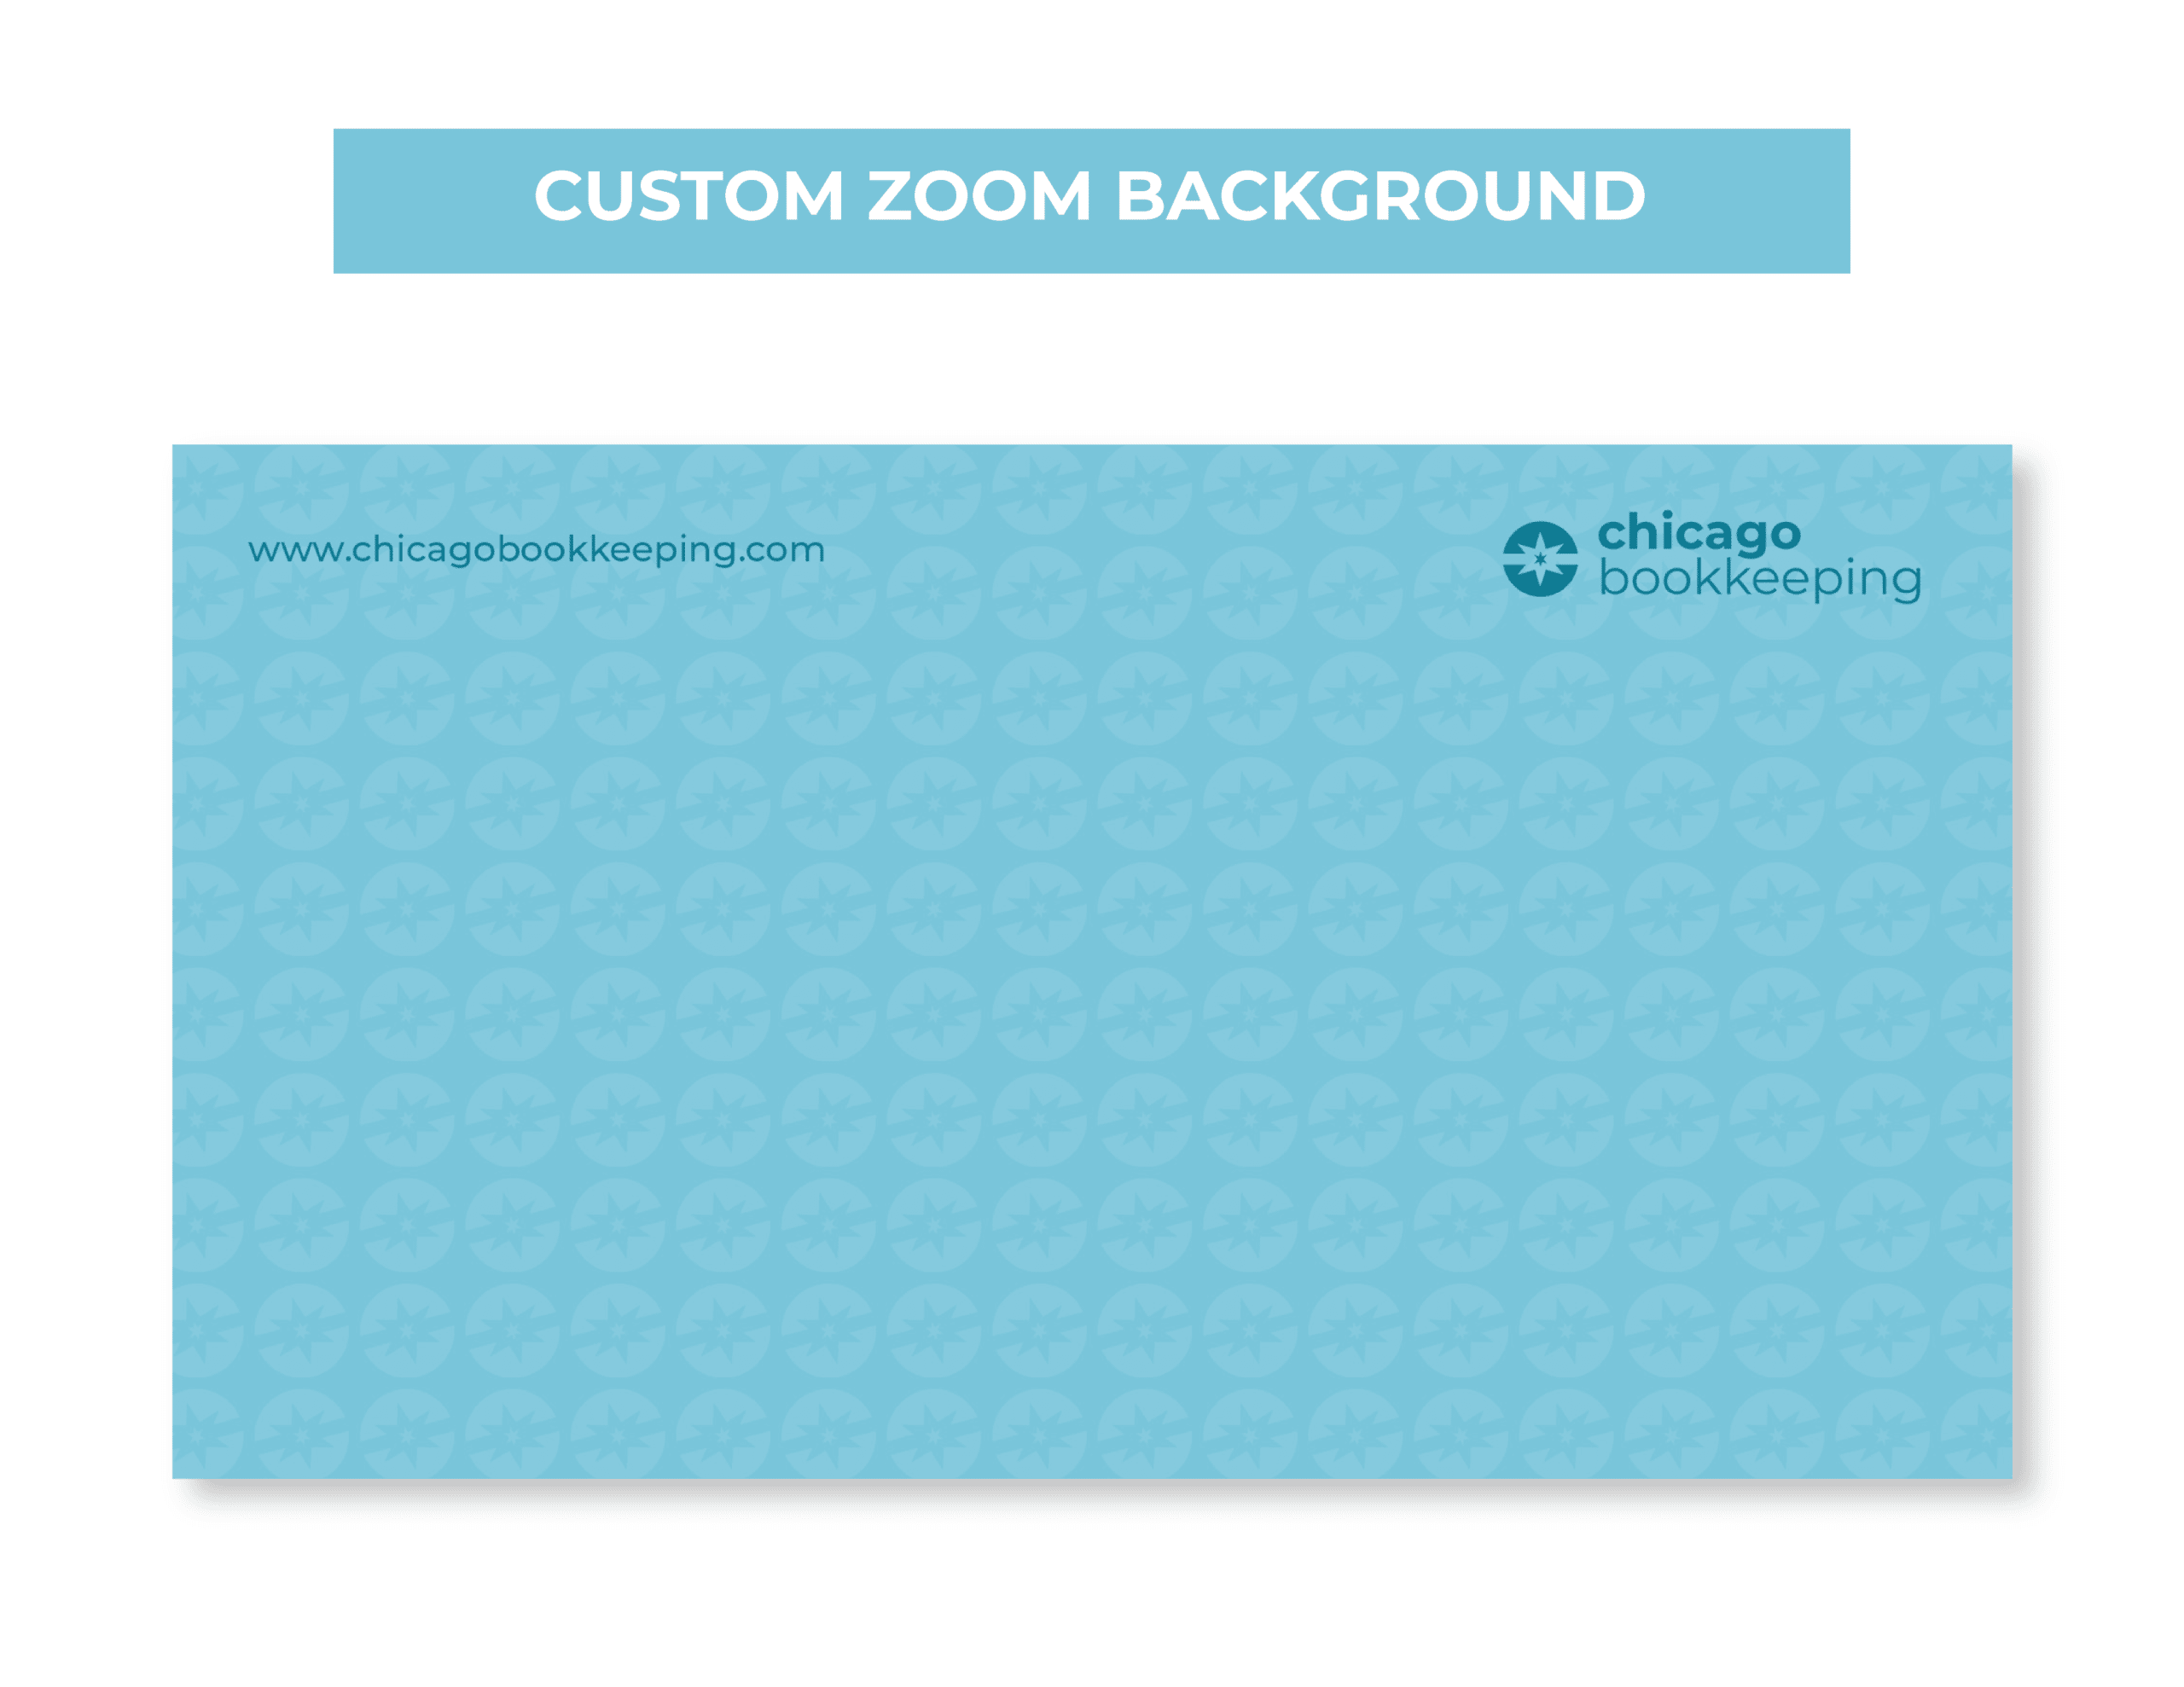 07Chicago_Bookkeeping__Custom Zoom Background